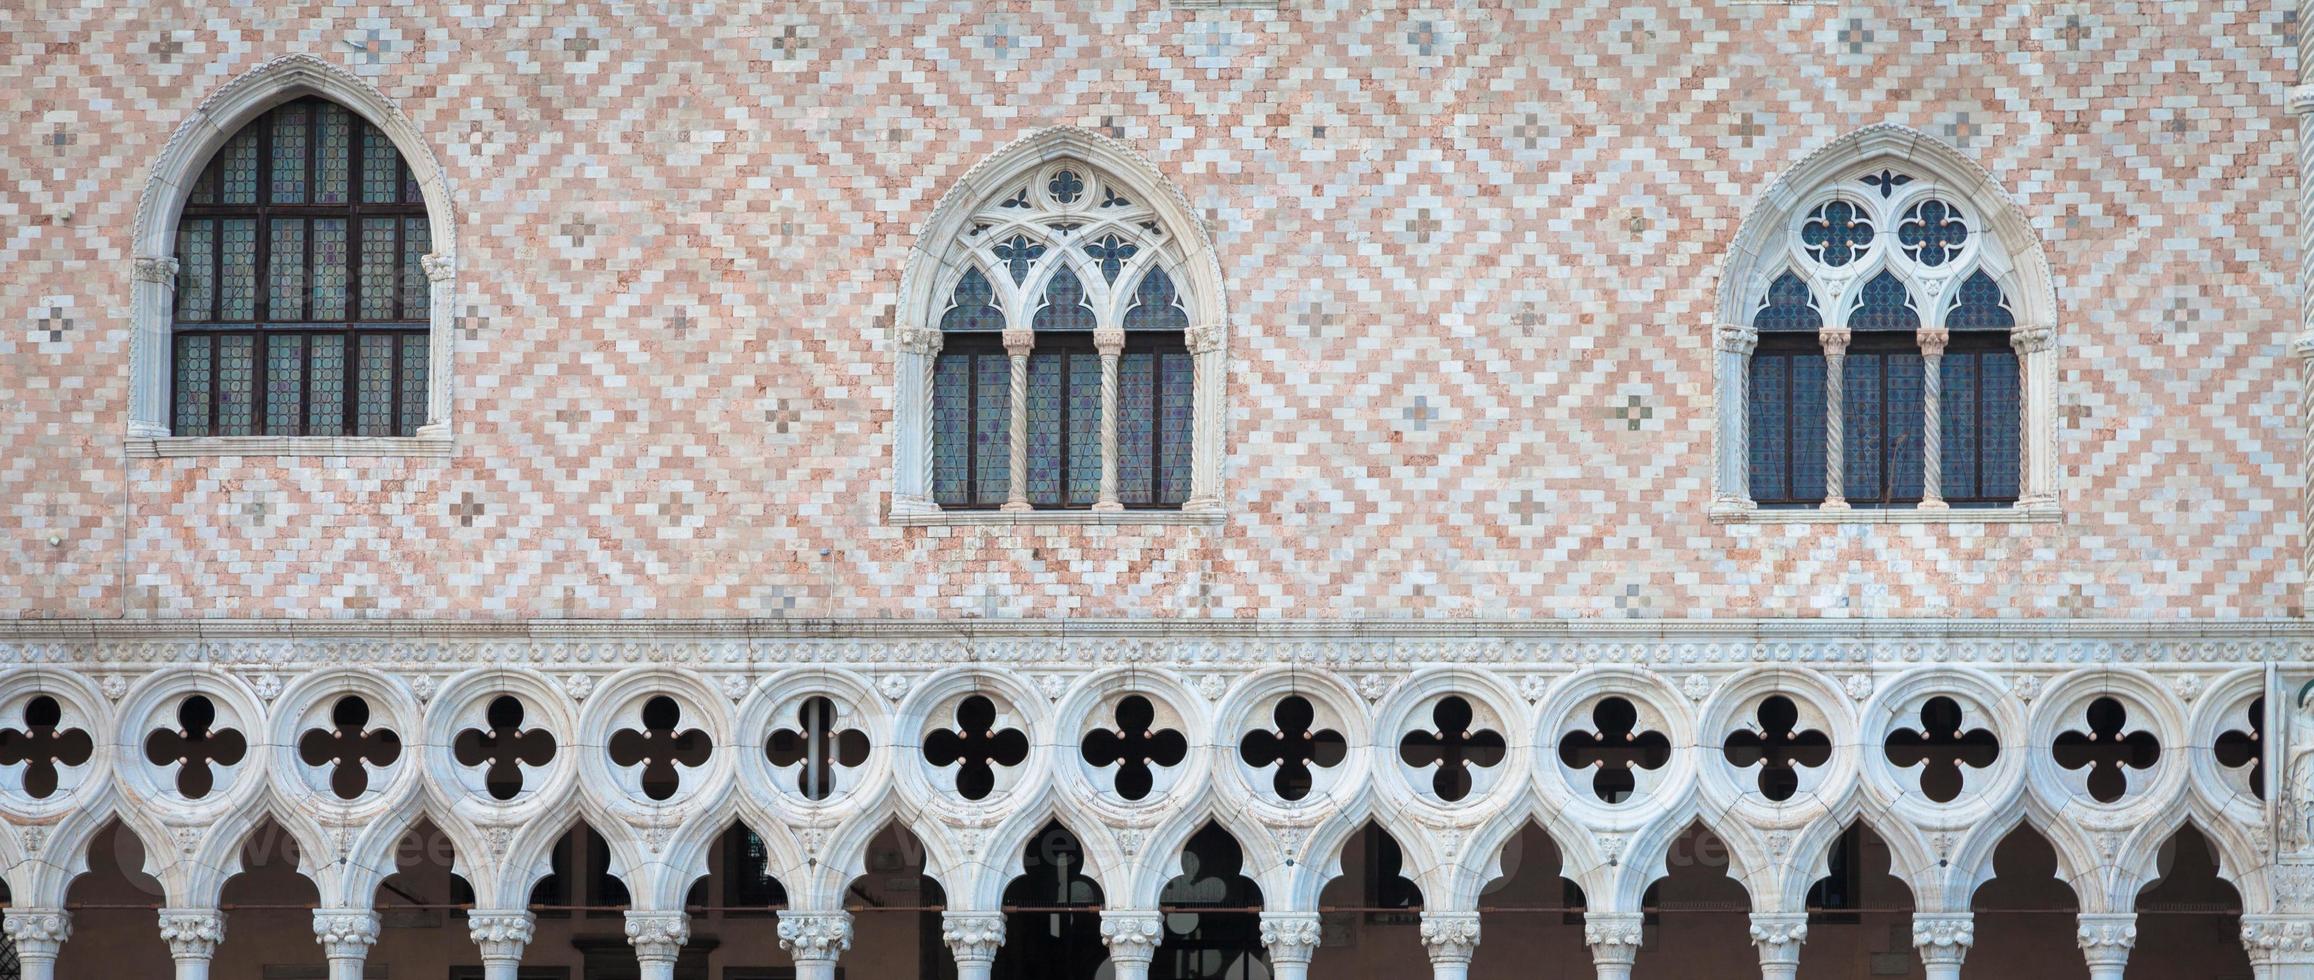 Venedig, Italien - palazzo ducale detalj foto